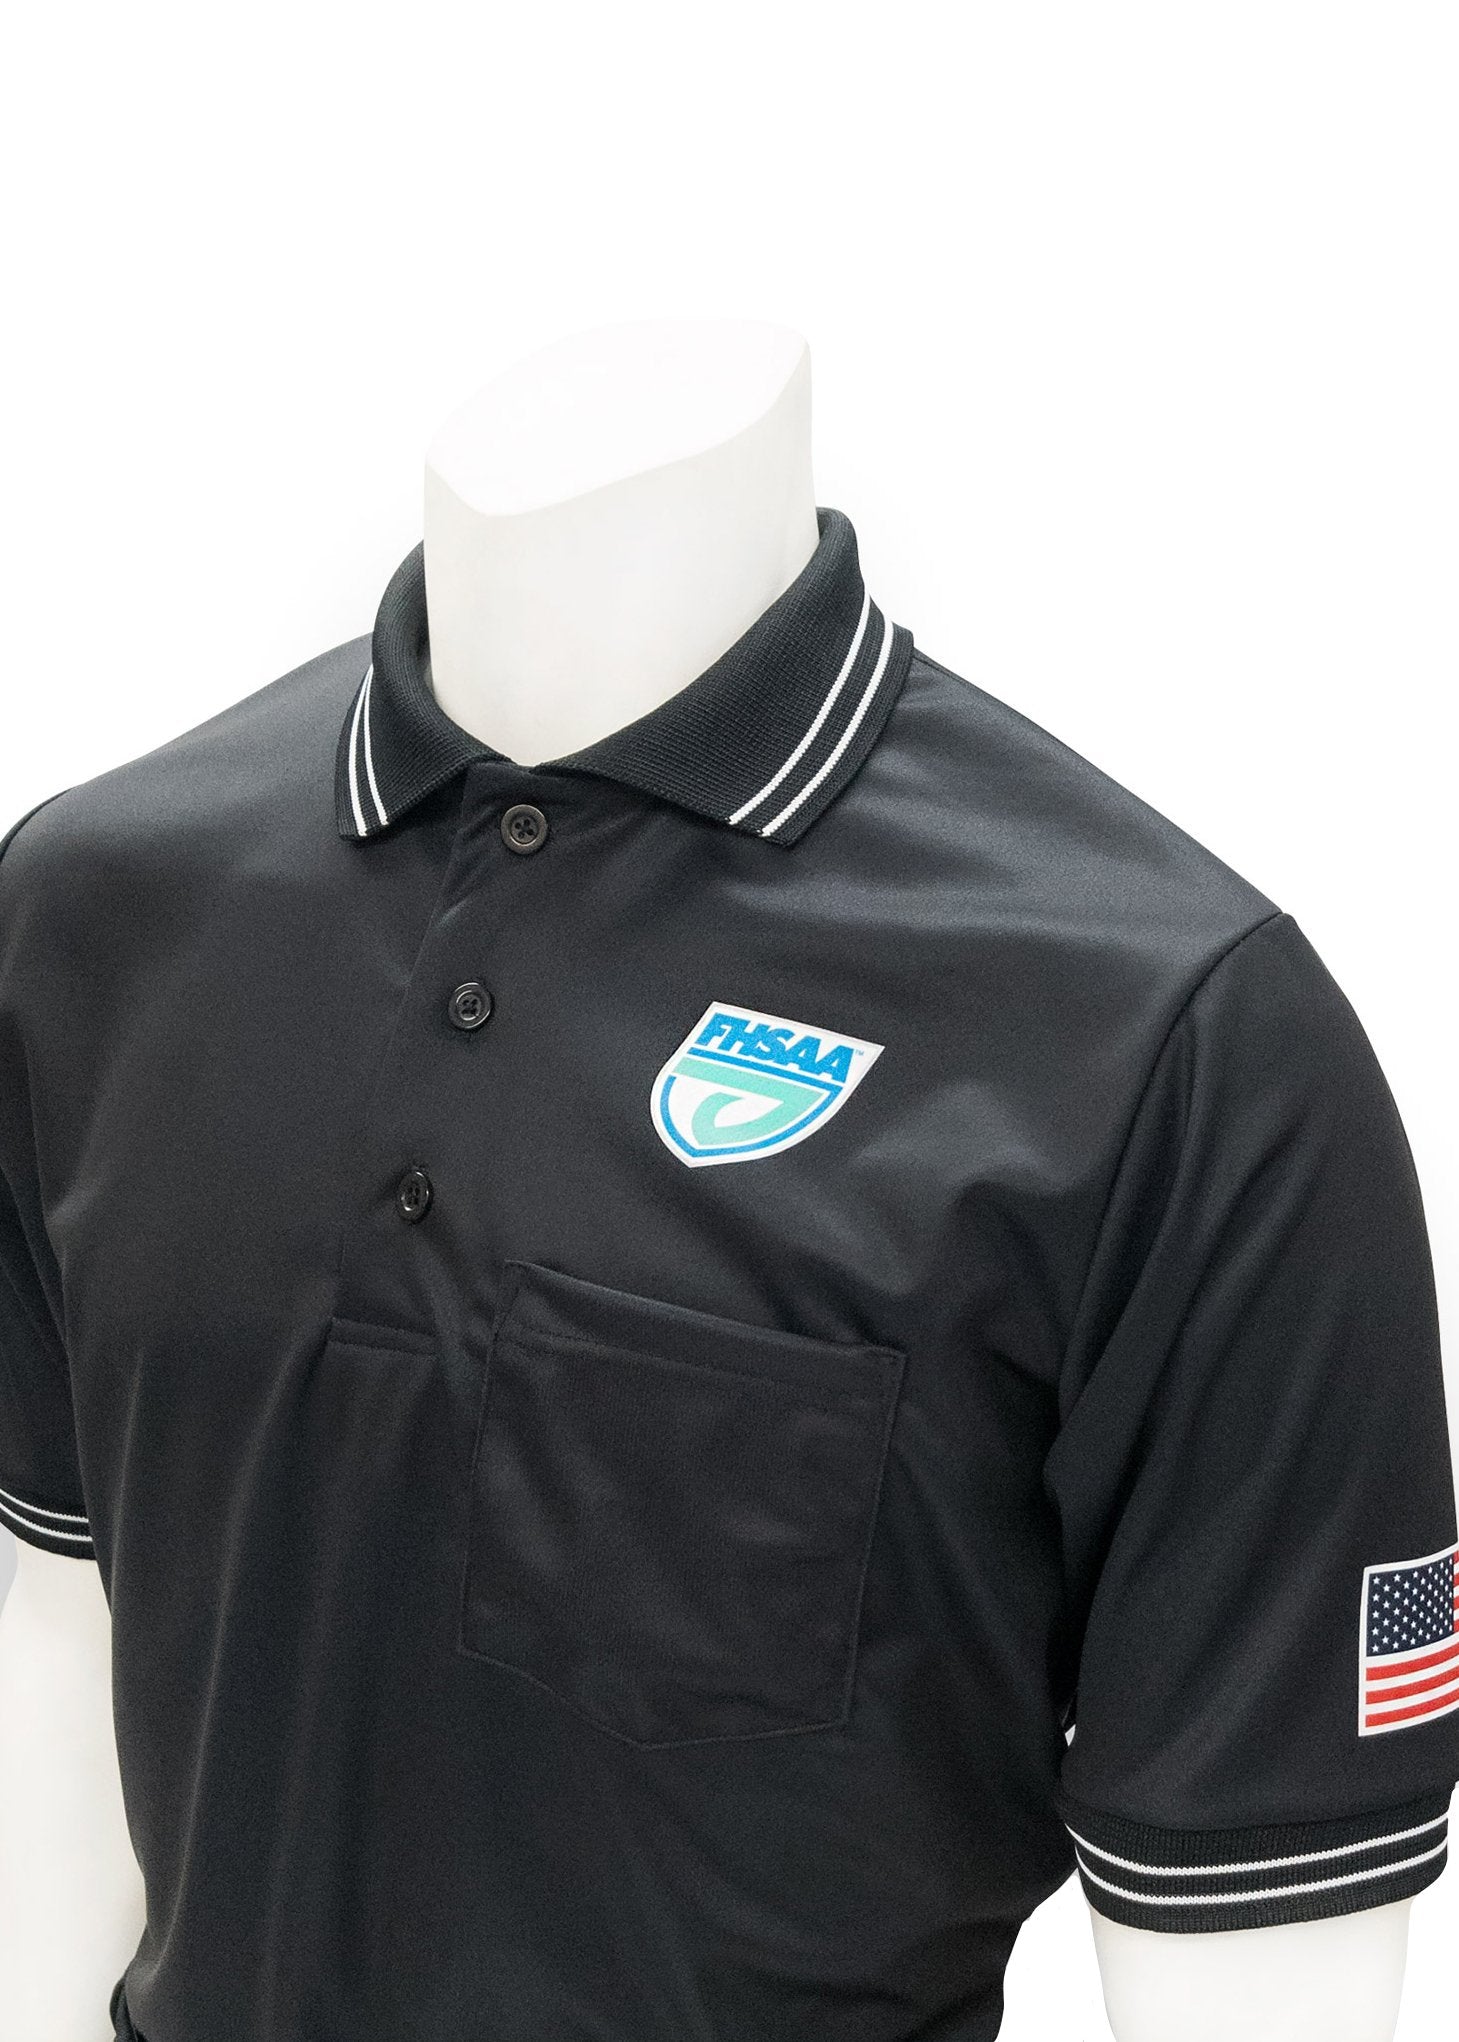 USA300FL - Smitty "Made in USA" - Baseball Men's Short Sleeve Shirt Black